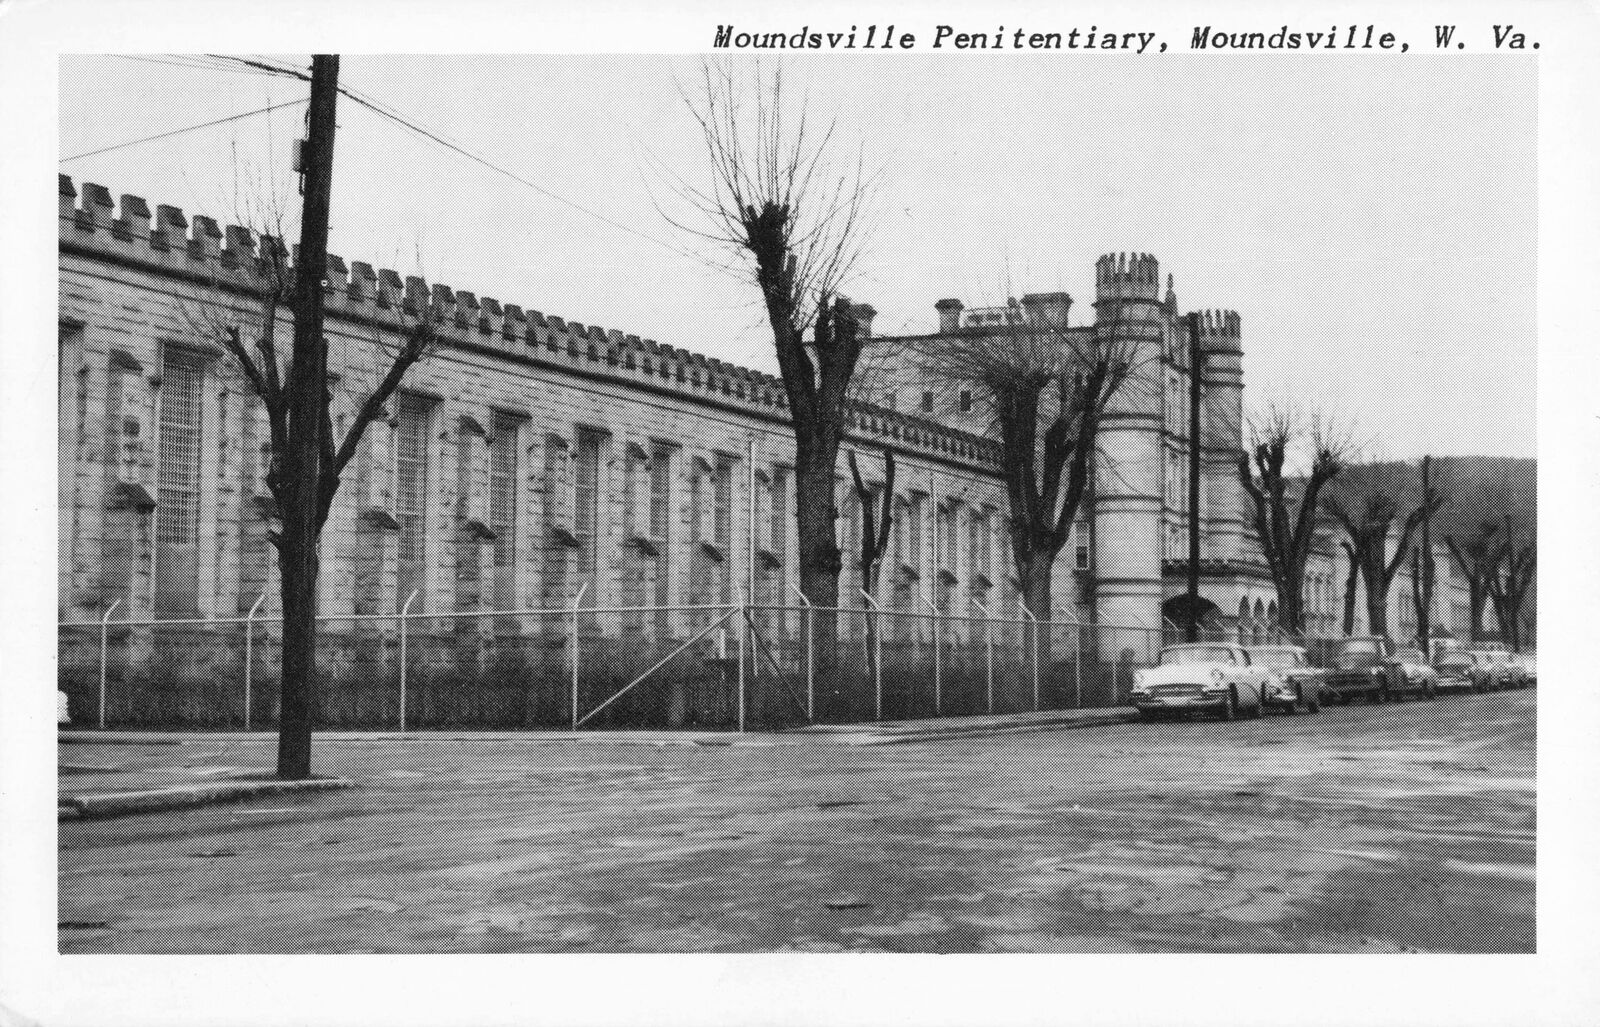 ASYLUM Moundsville WV West Virginia Prison opened 1876 known INHUMANE Conditions